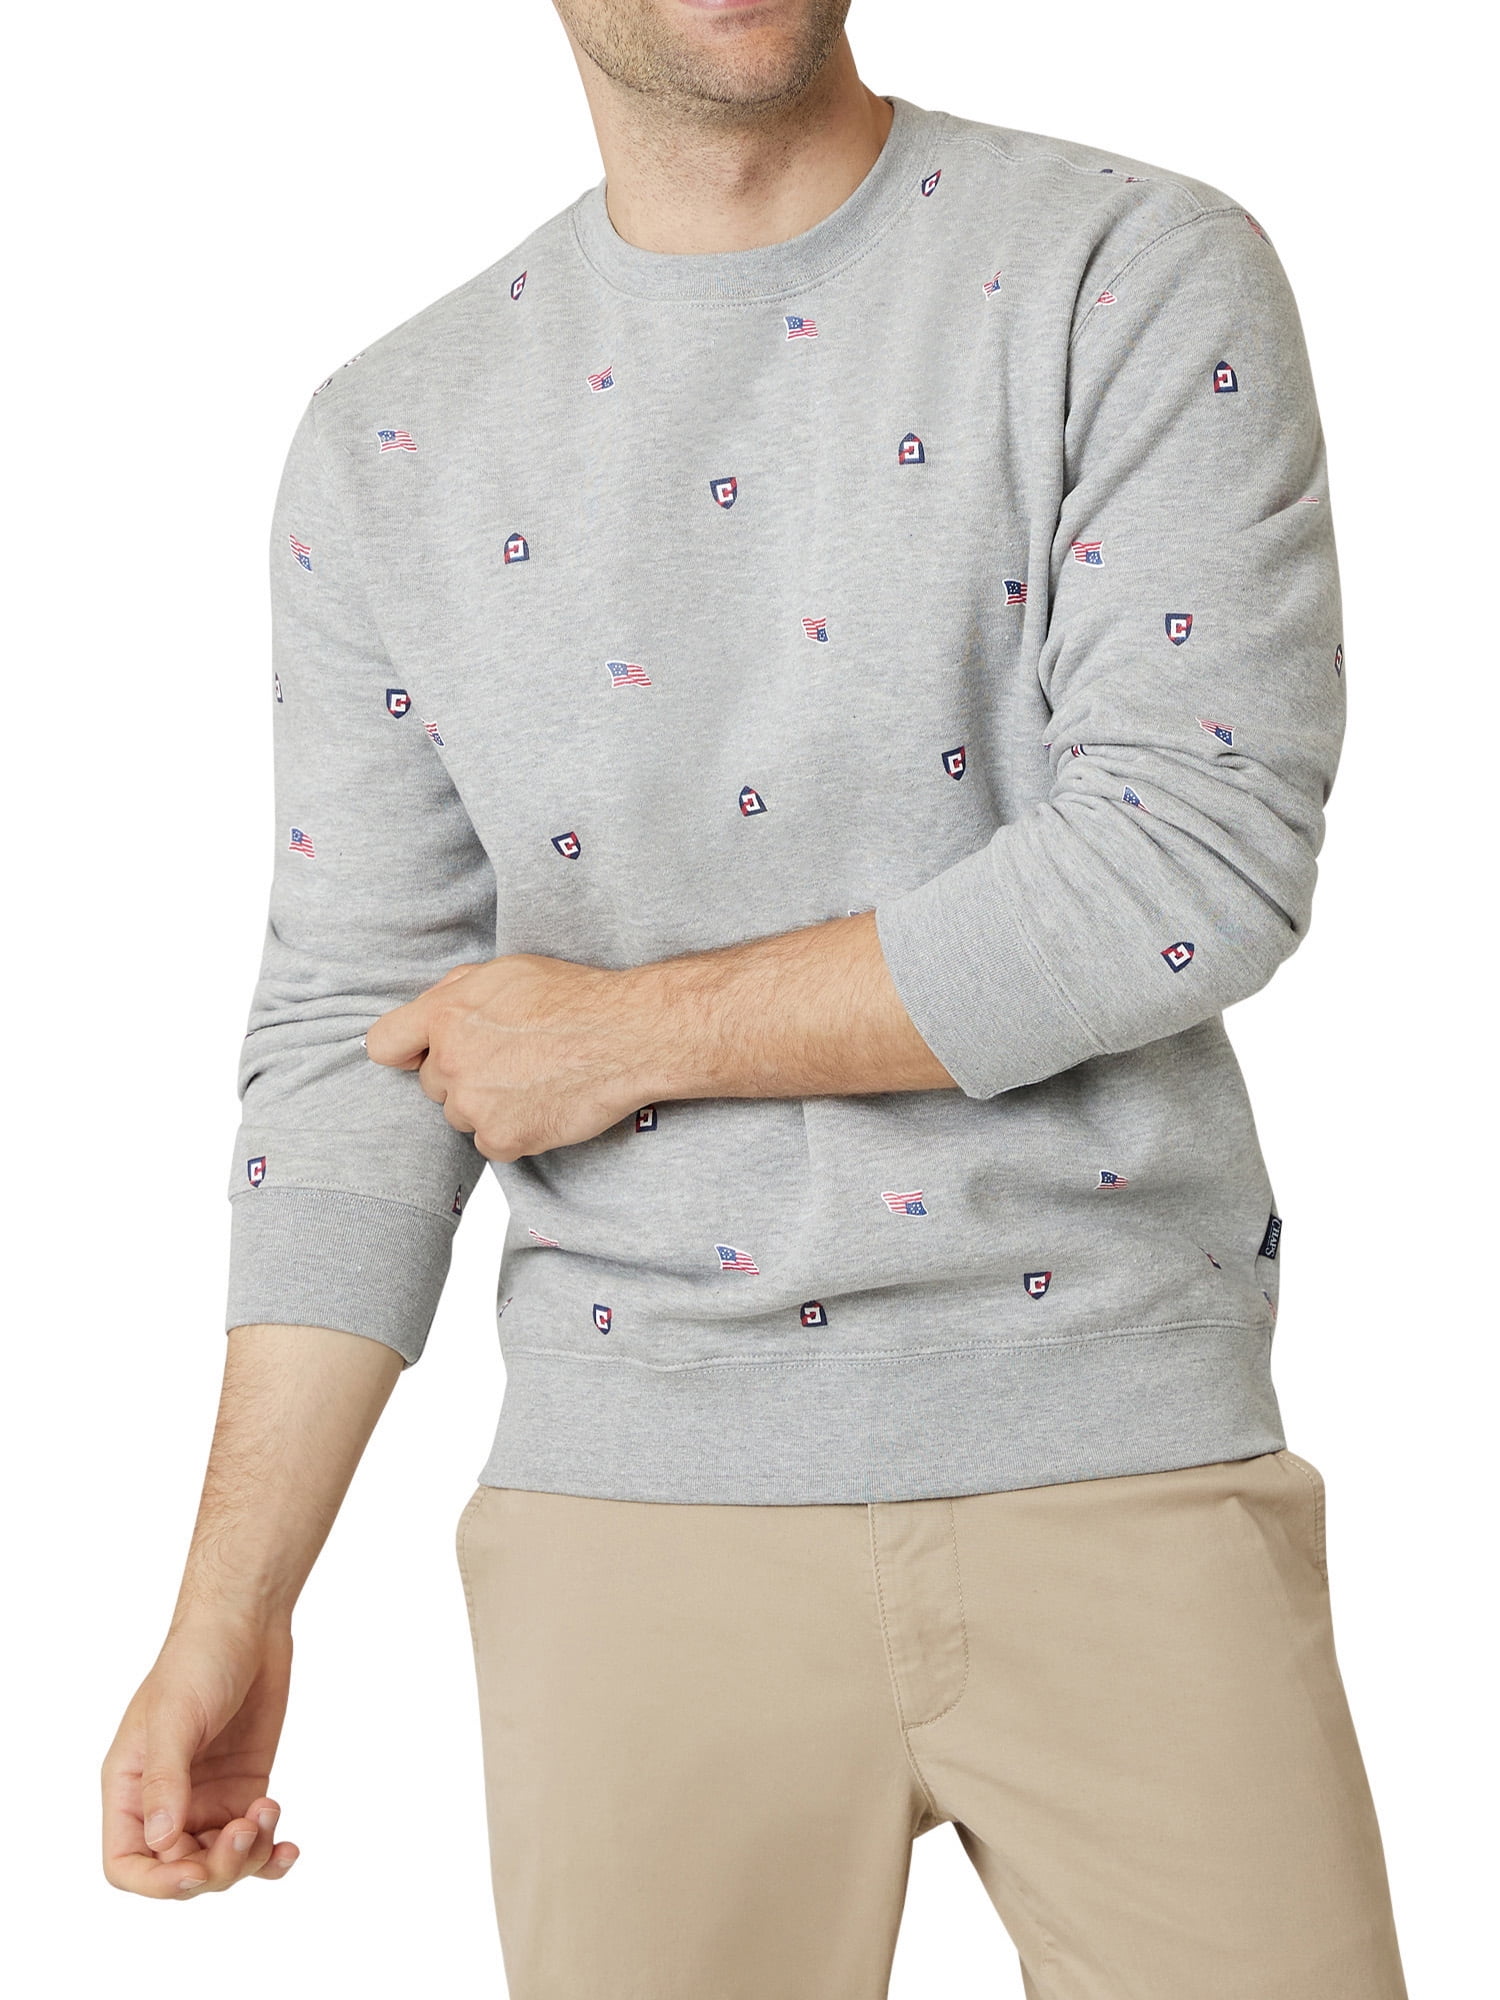 Men's All-Over Print Long-sleeved Sweatshirt